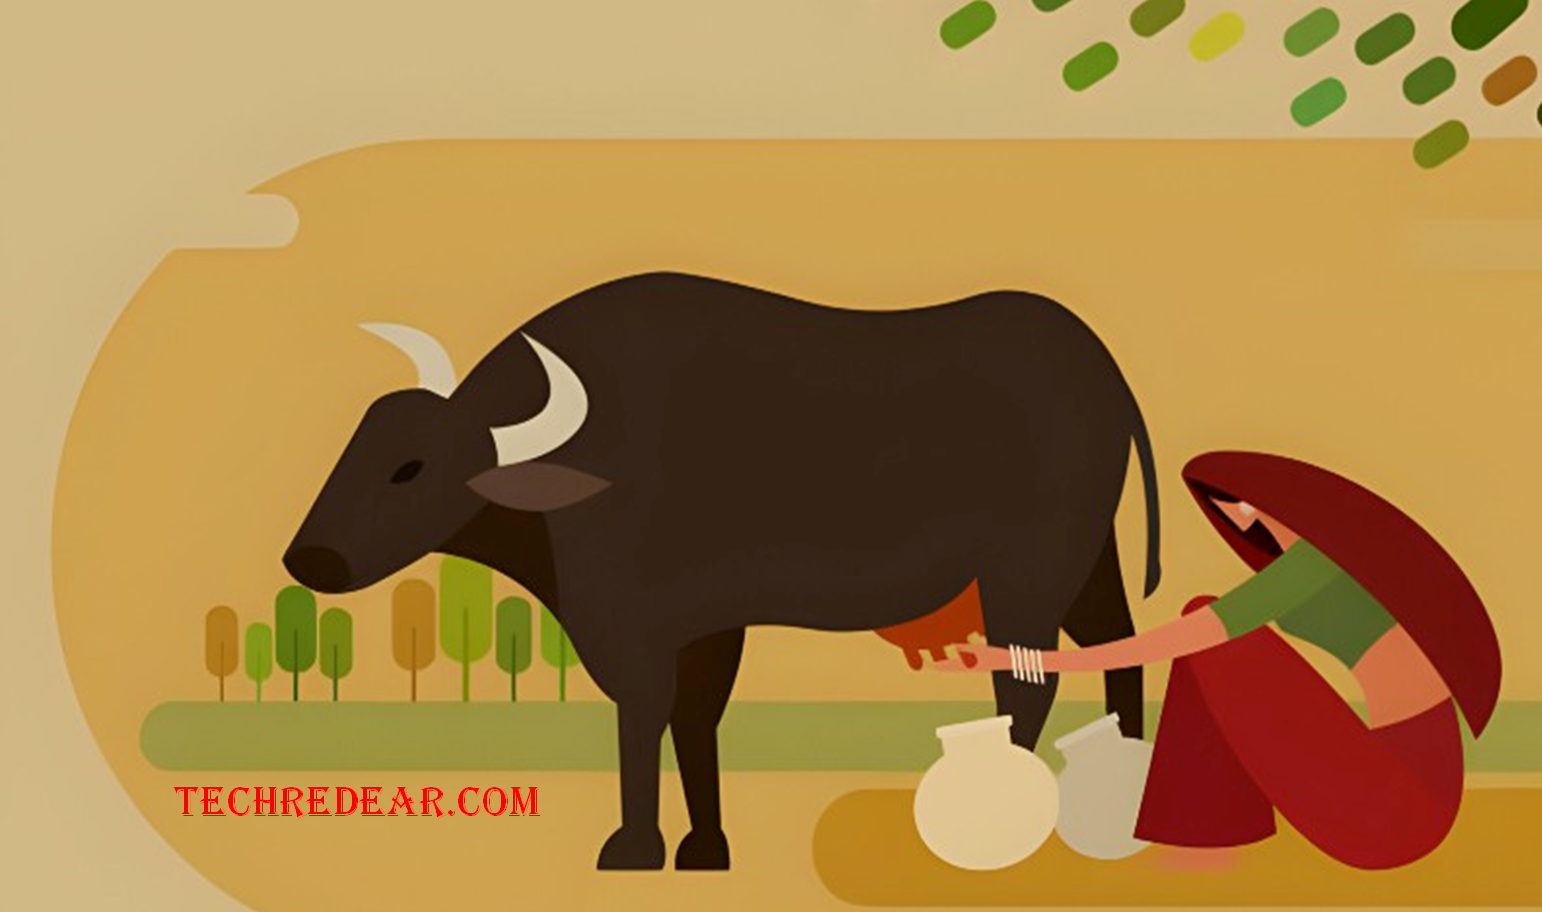 wellhealthorganic buffalo milk tag: Assurance and Quality